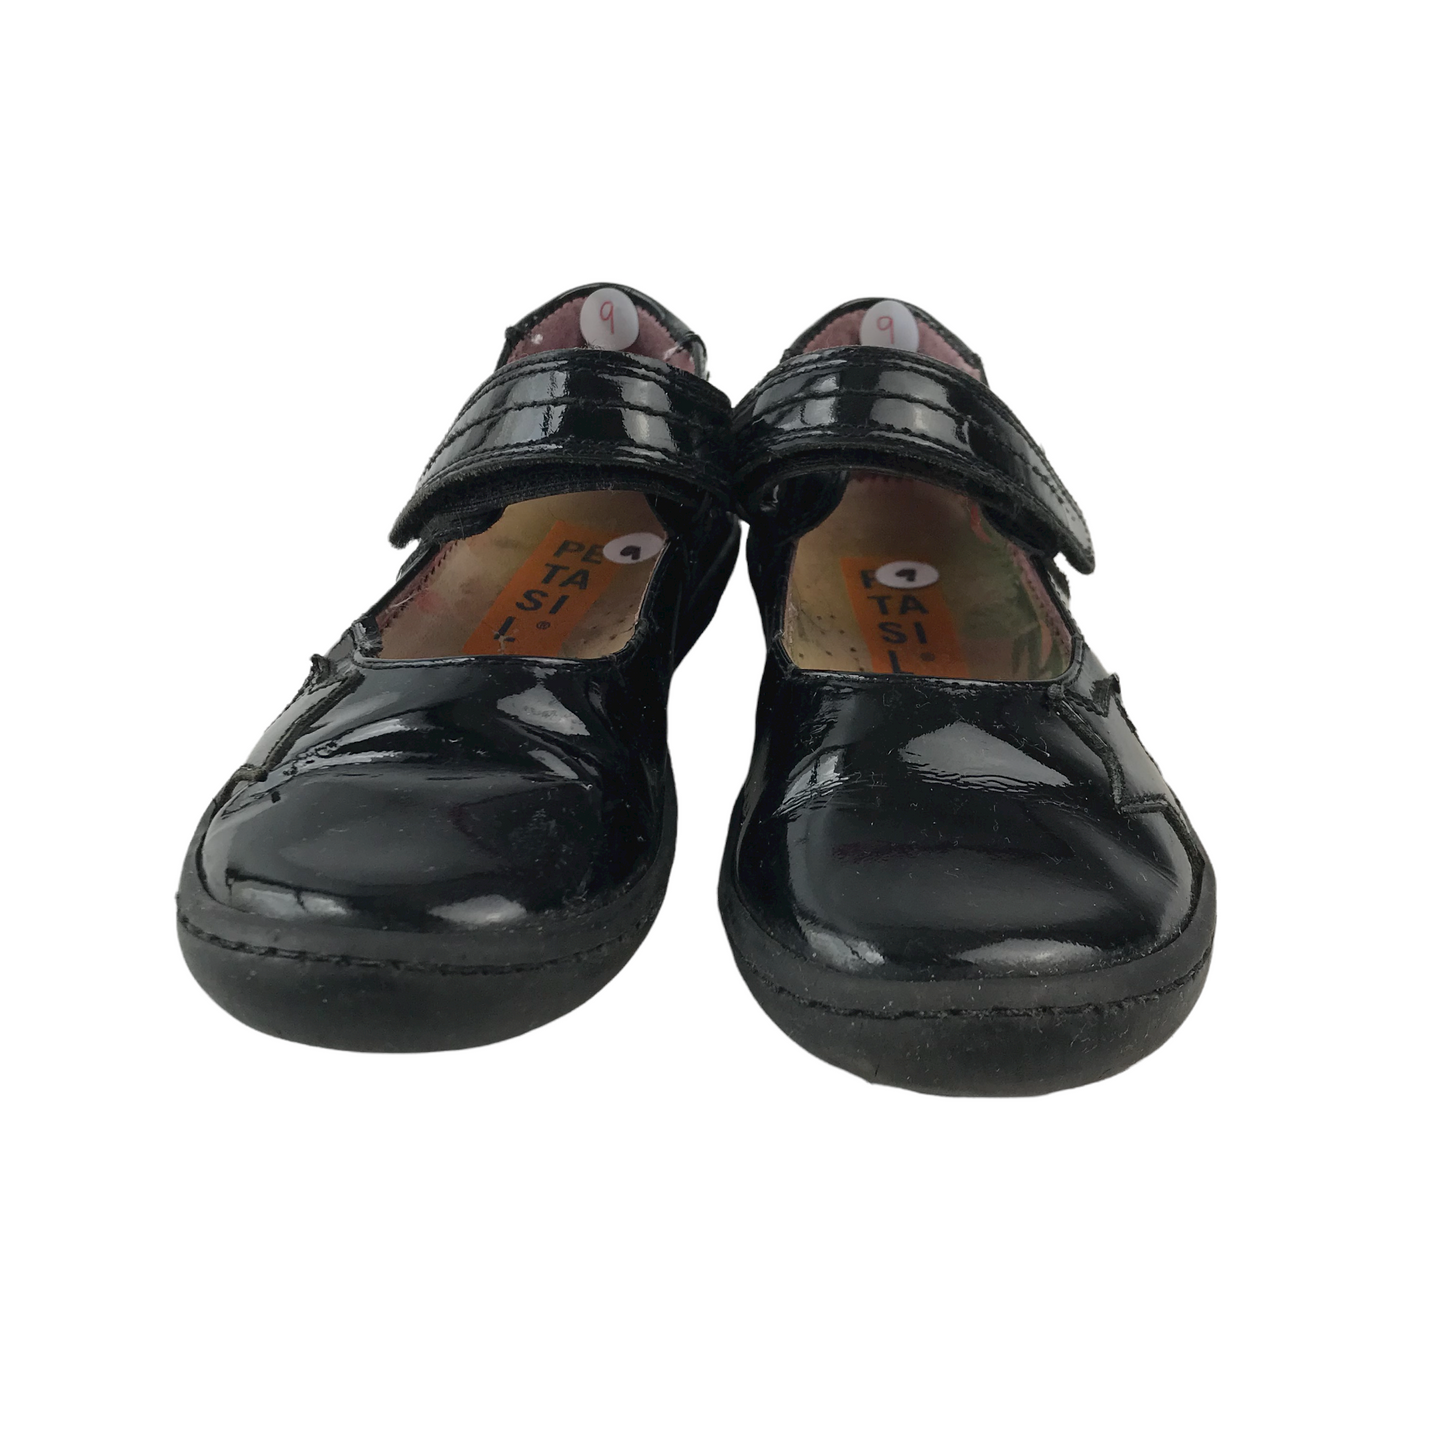 Petasil Black School Pumps With Single Strap and Stars Shoe Size 9 (jr)